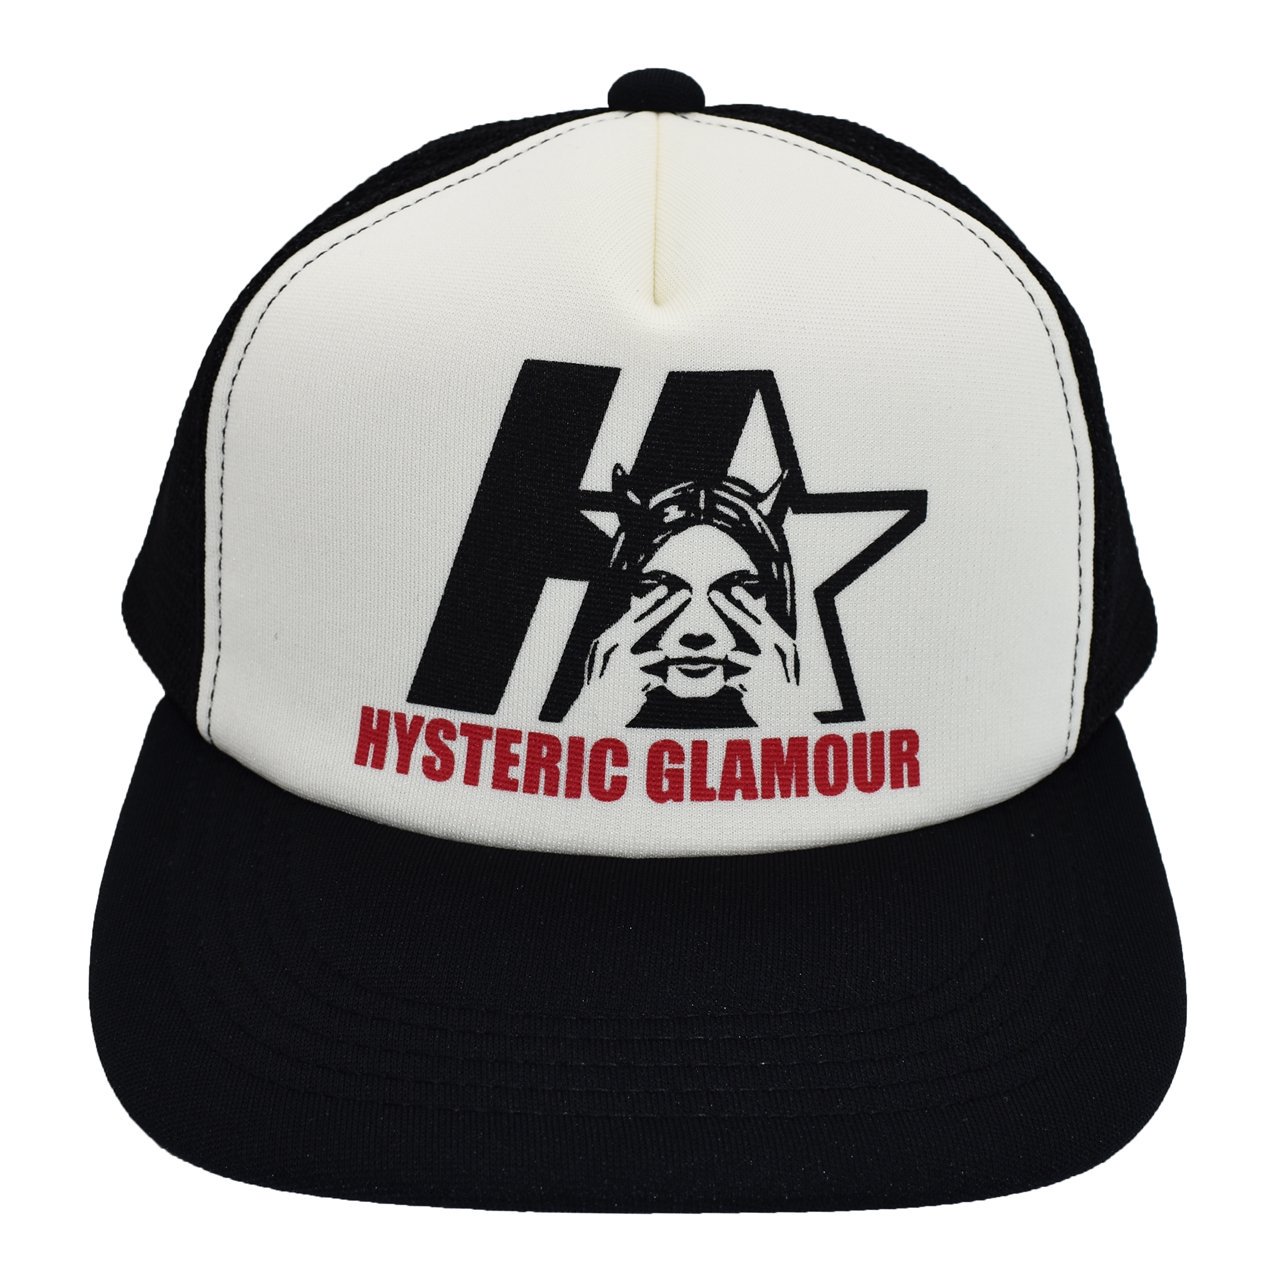 HYSTERIC GLAMOUR(ヒステリックグラマー)
新作
メッシュキャップ
帽子
02243QH02 